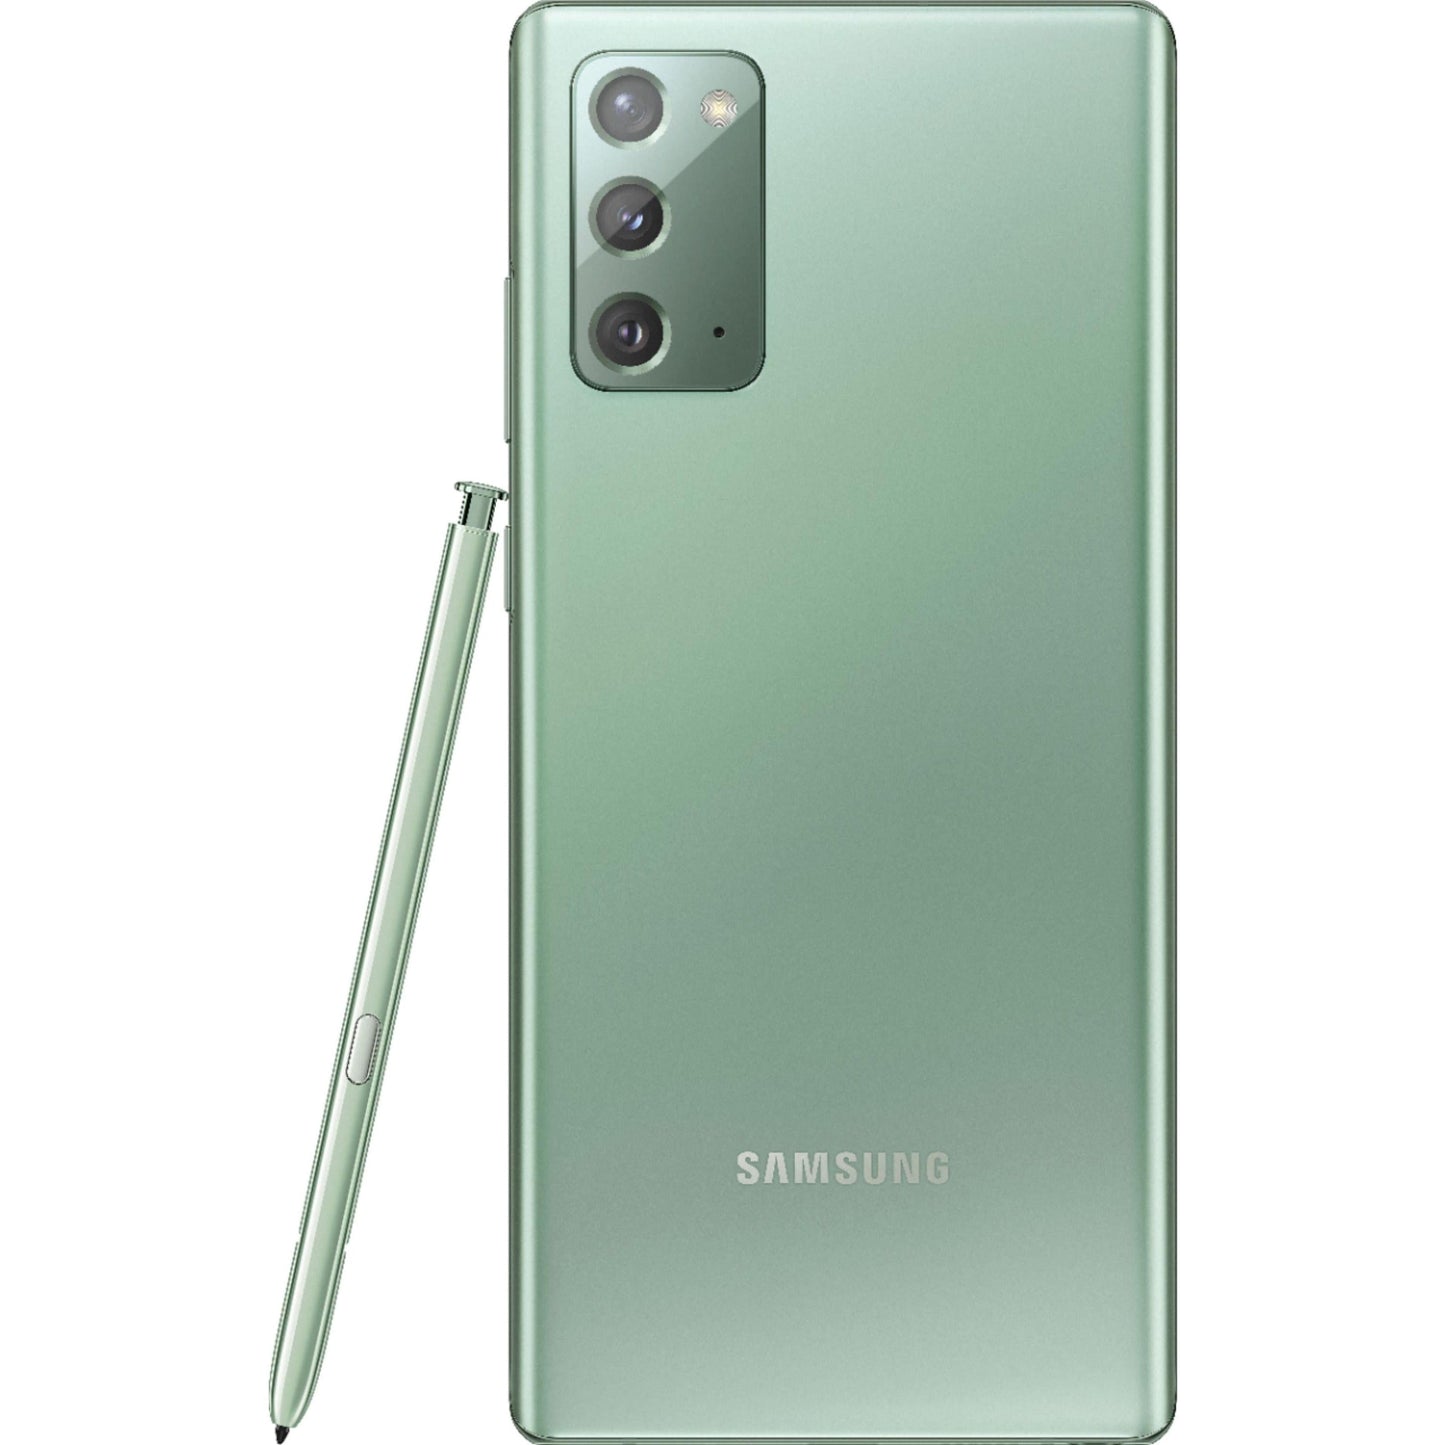 Samsung Galaxy Note20 5G - 128 GB - Mystic Green - Verizon Unlocked